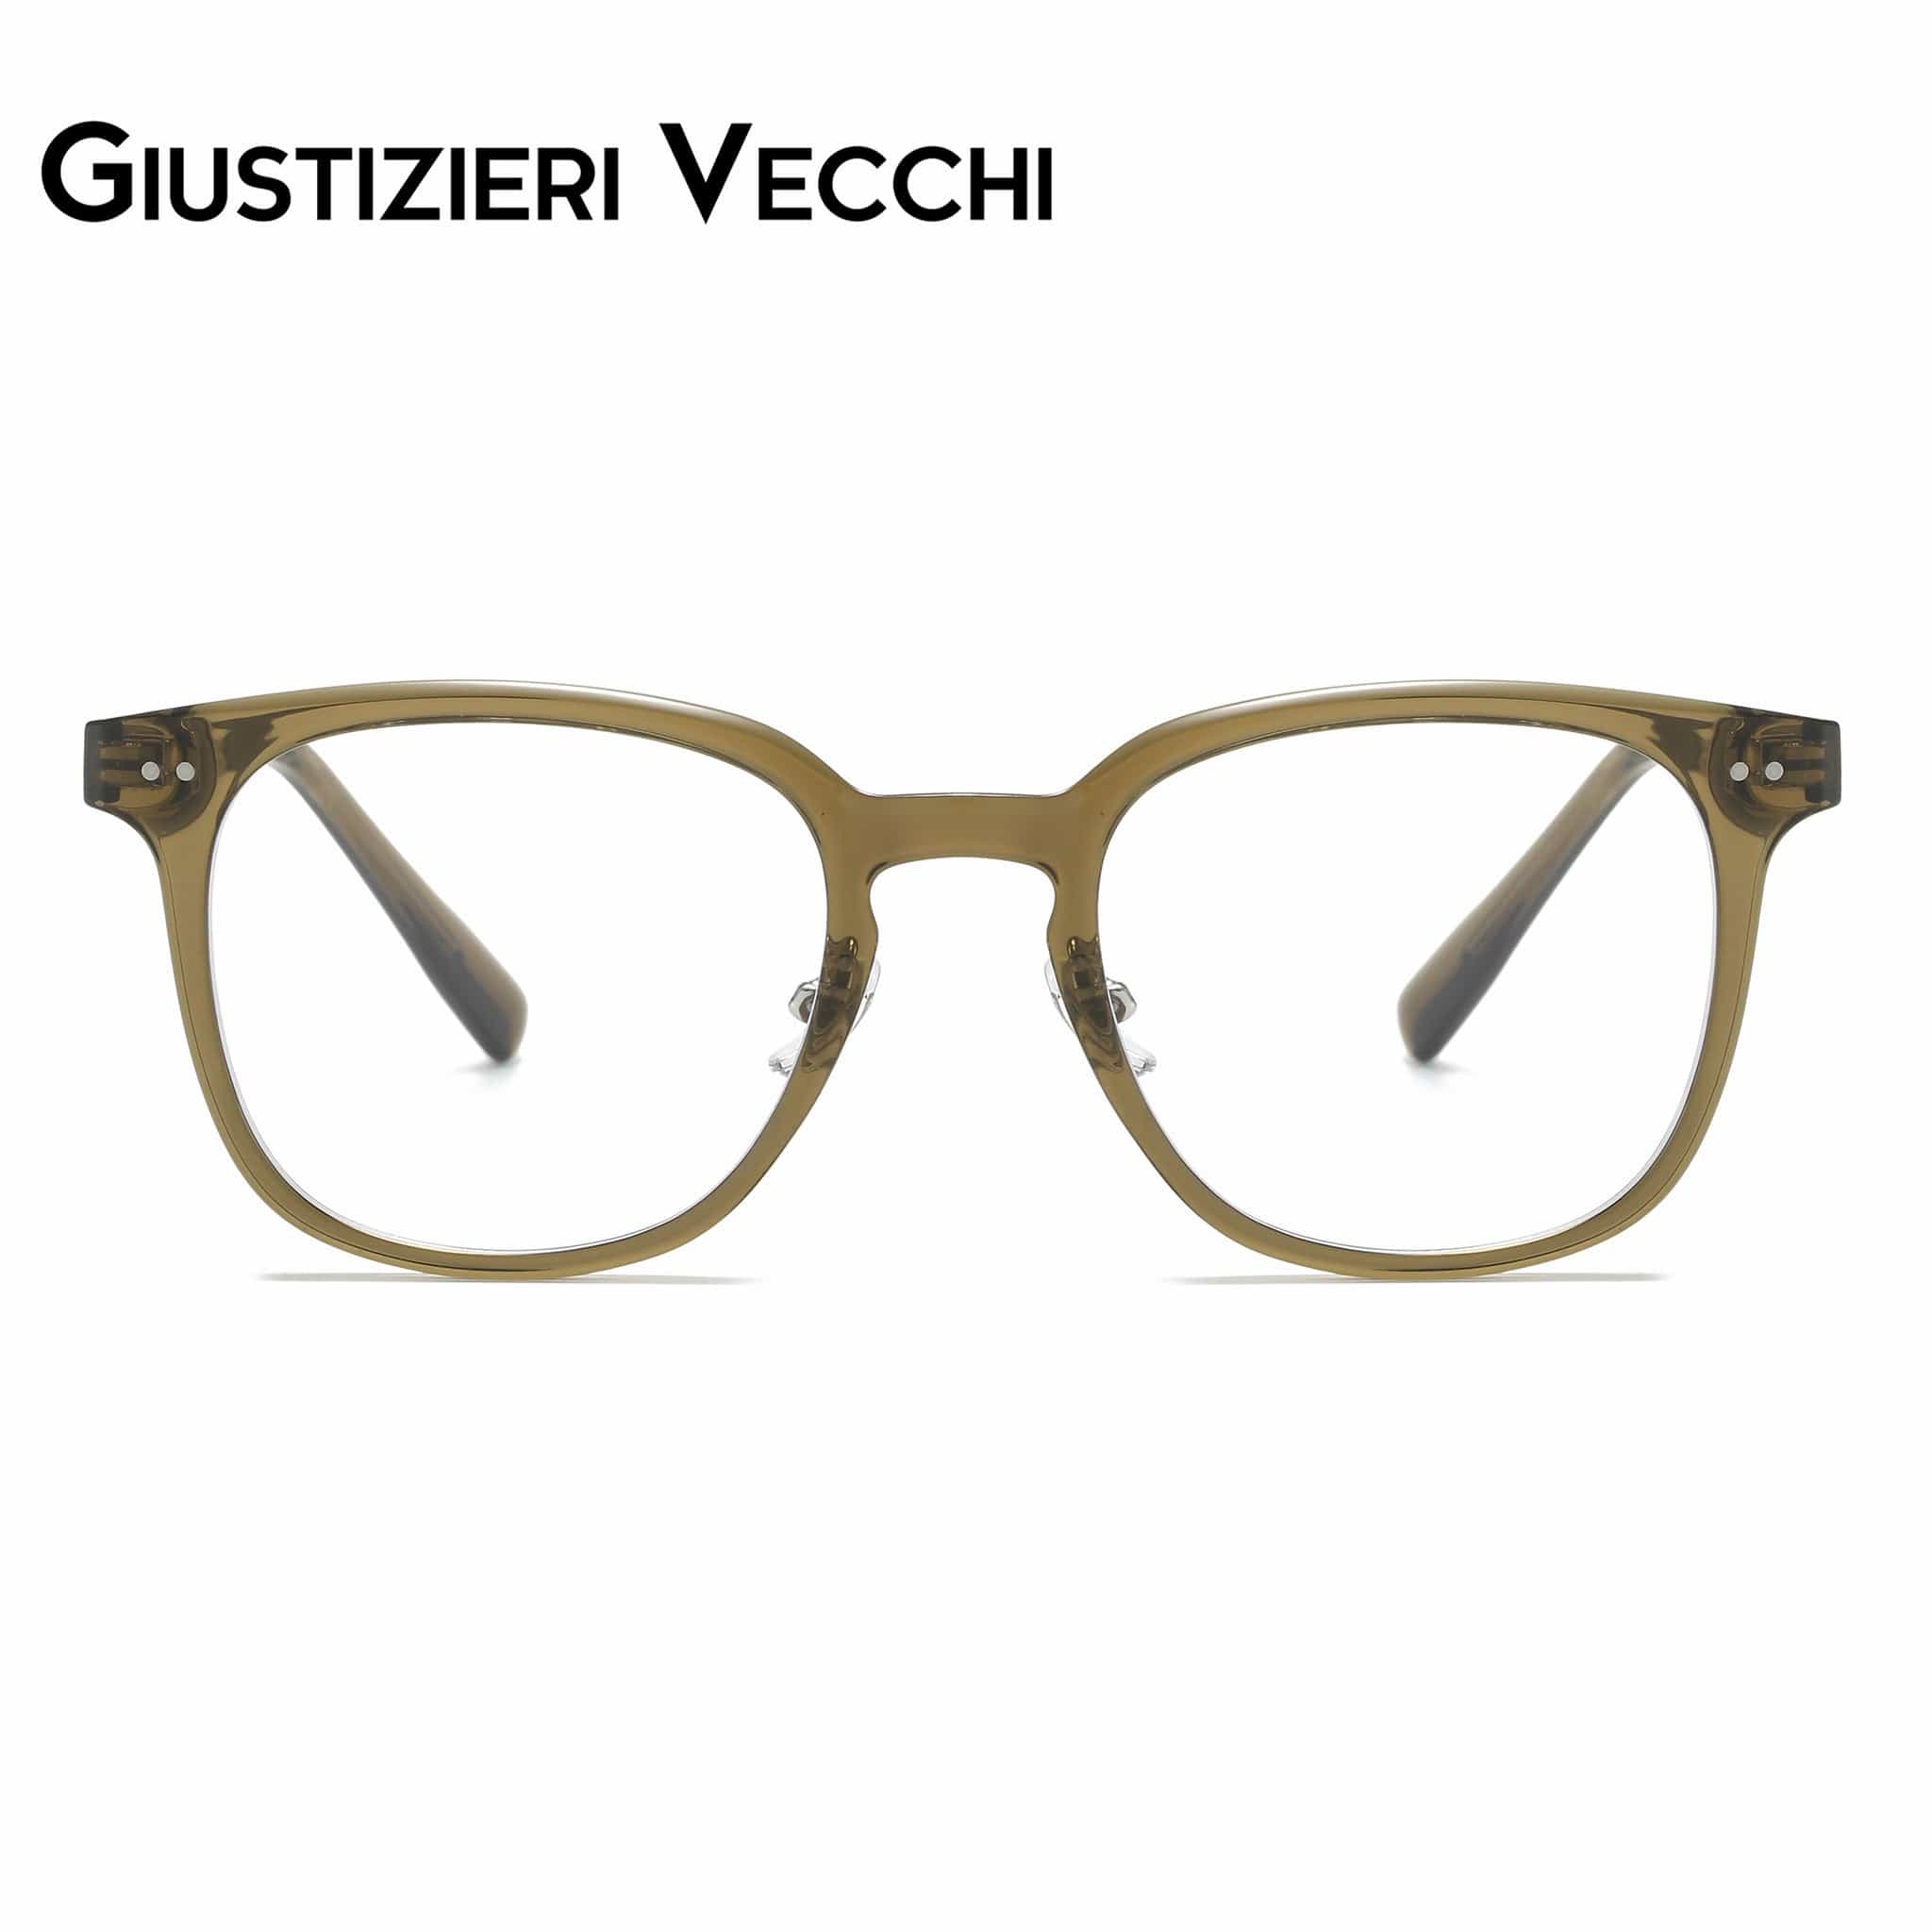 GIUSTIZIERI VECCHI Eyeglasses Medium / Dark Beige Crystal RomaVista Duo